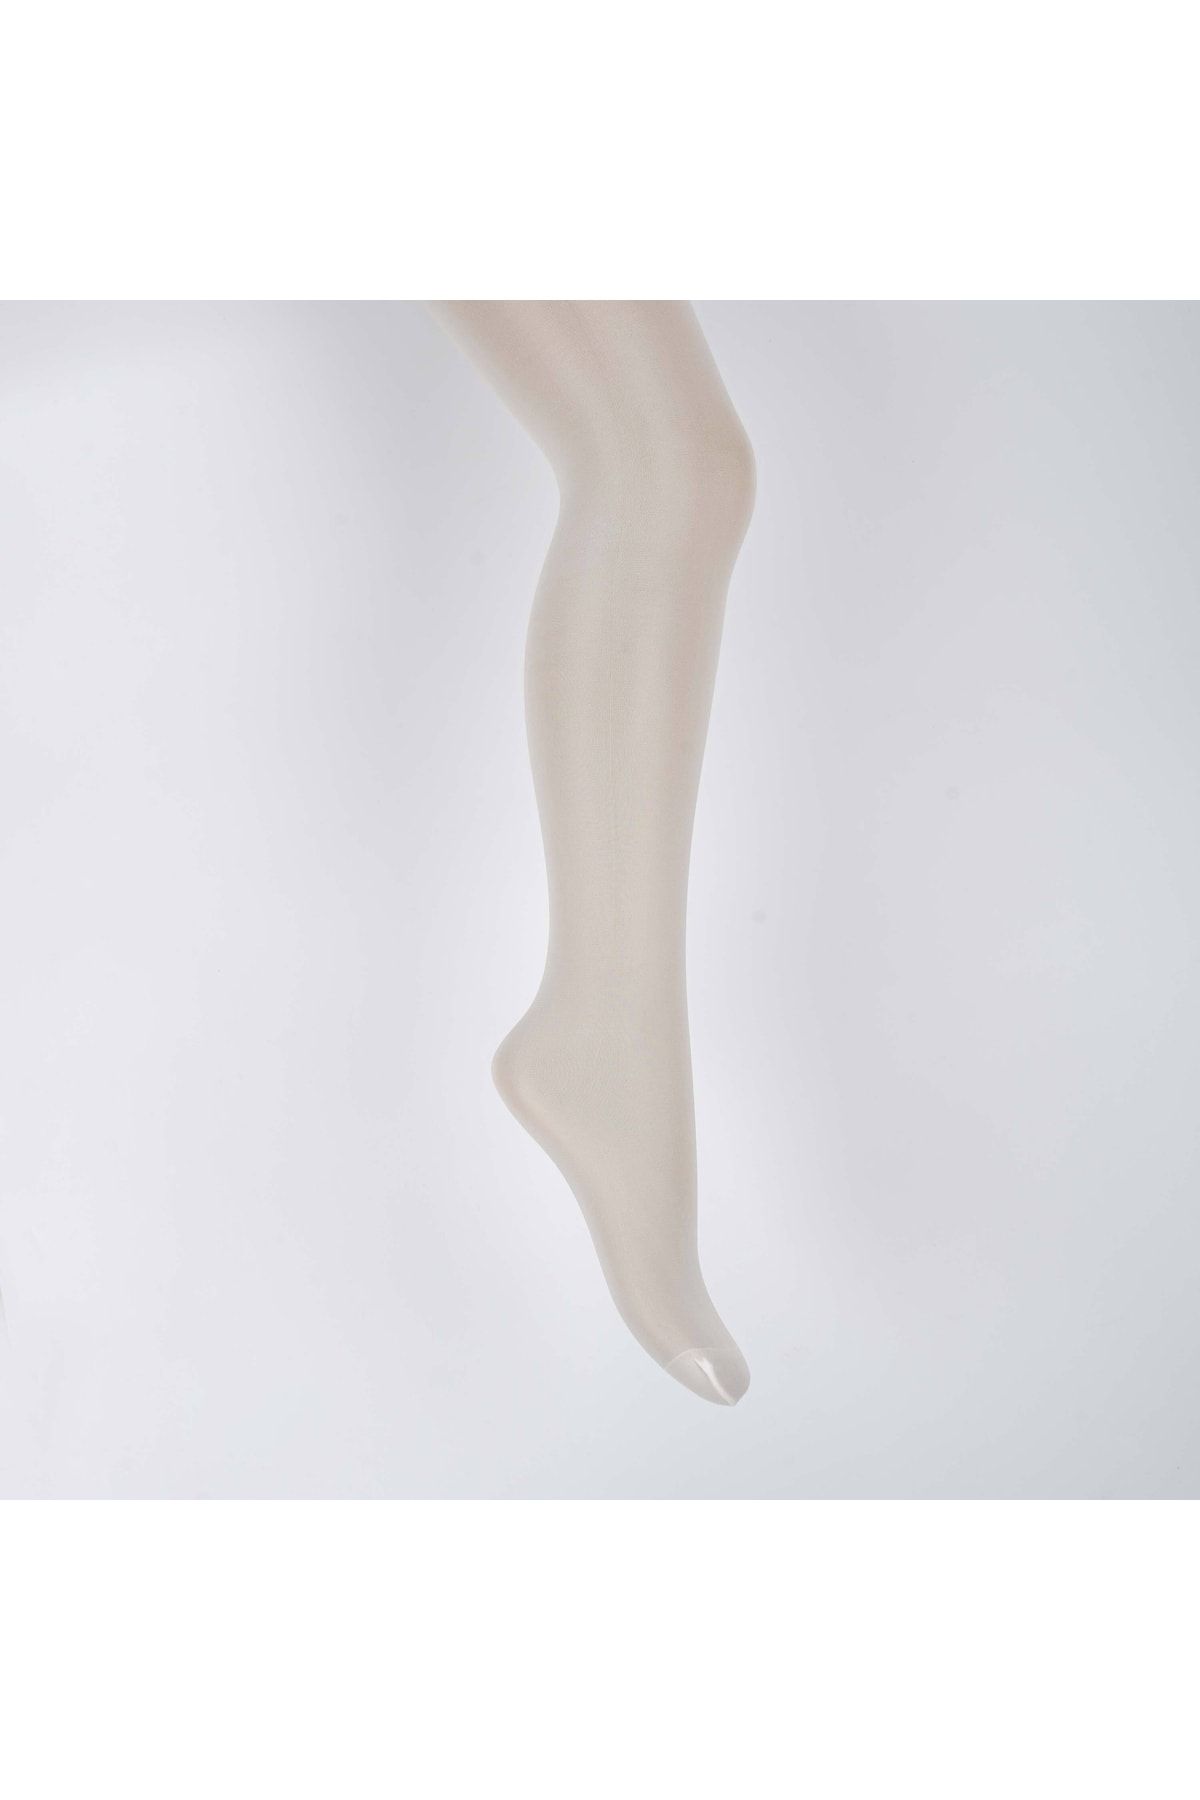 Katamino Mira Kız Çocuk Ince Külotlu Çorap